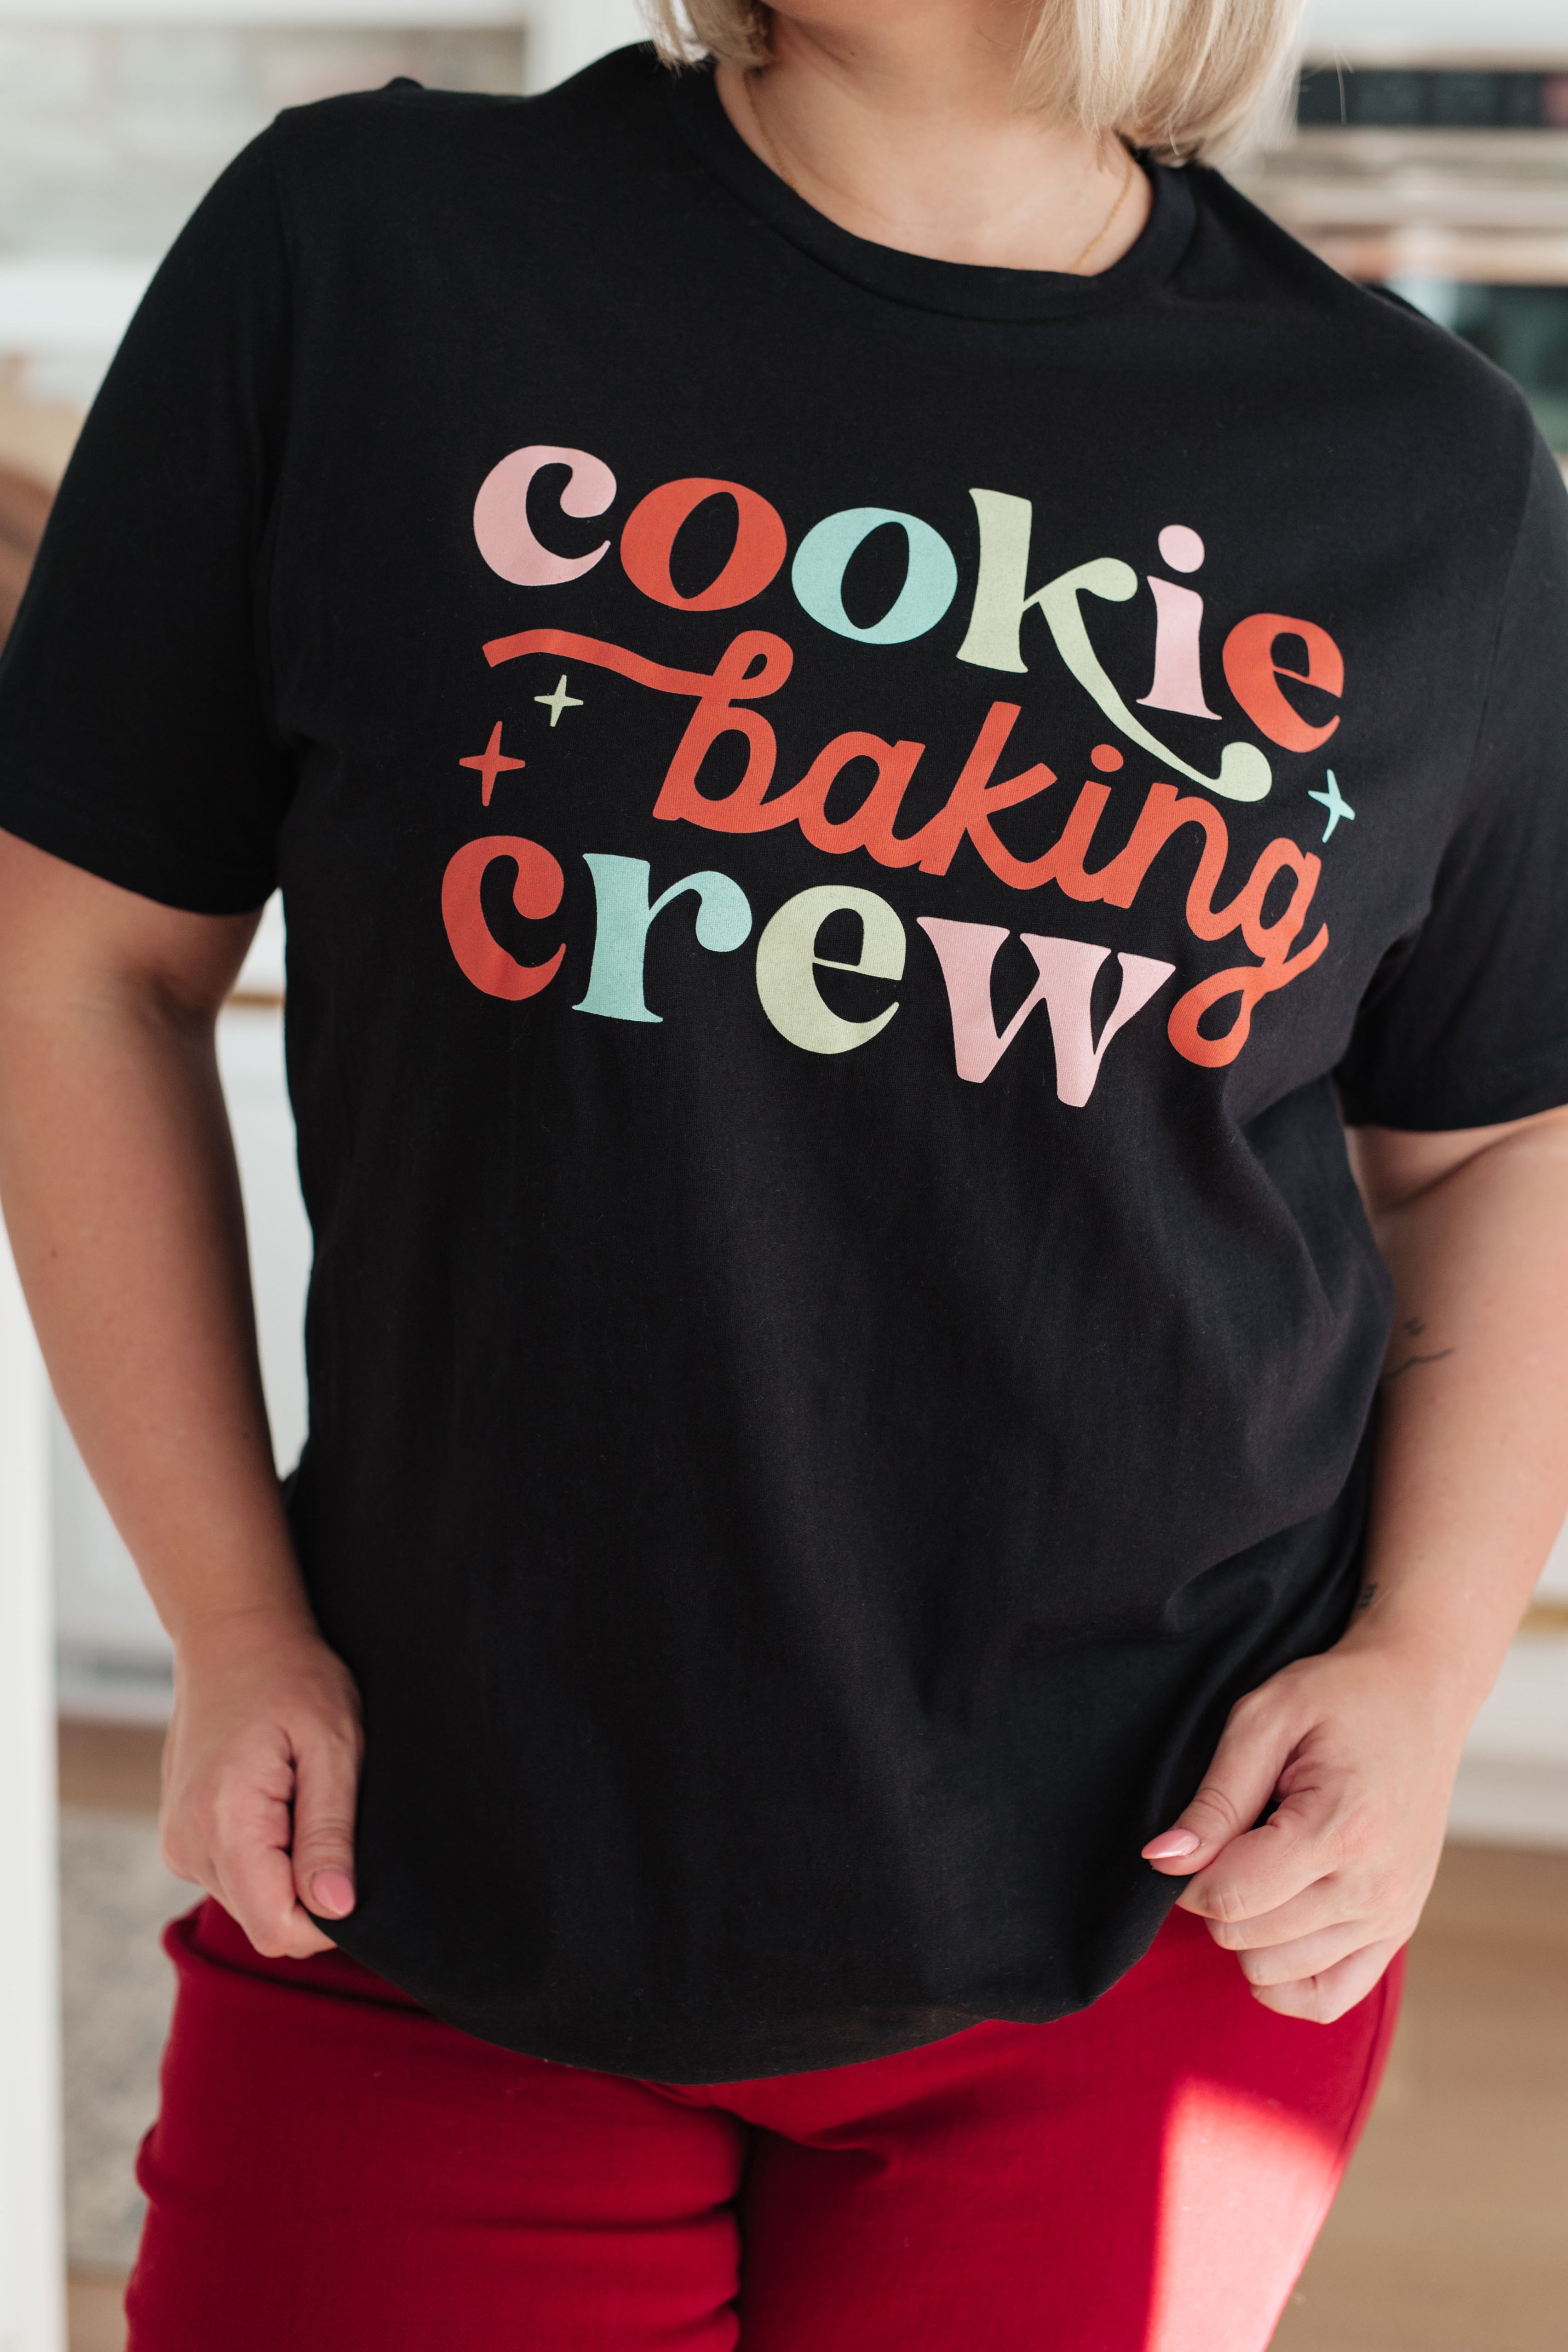 Cookie Baking Crew Graphic T - Lola Cerina Boutique